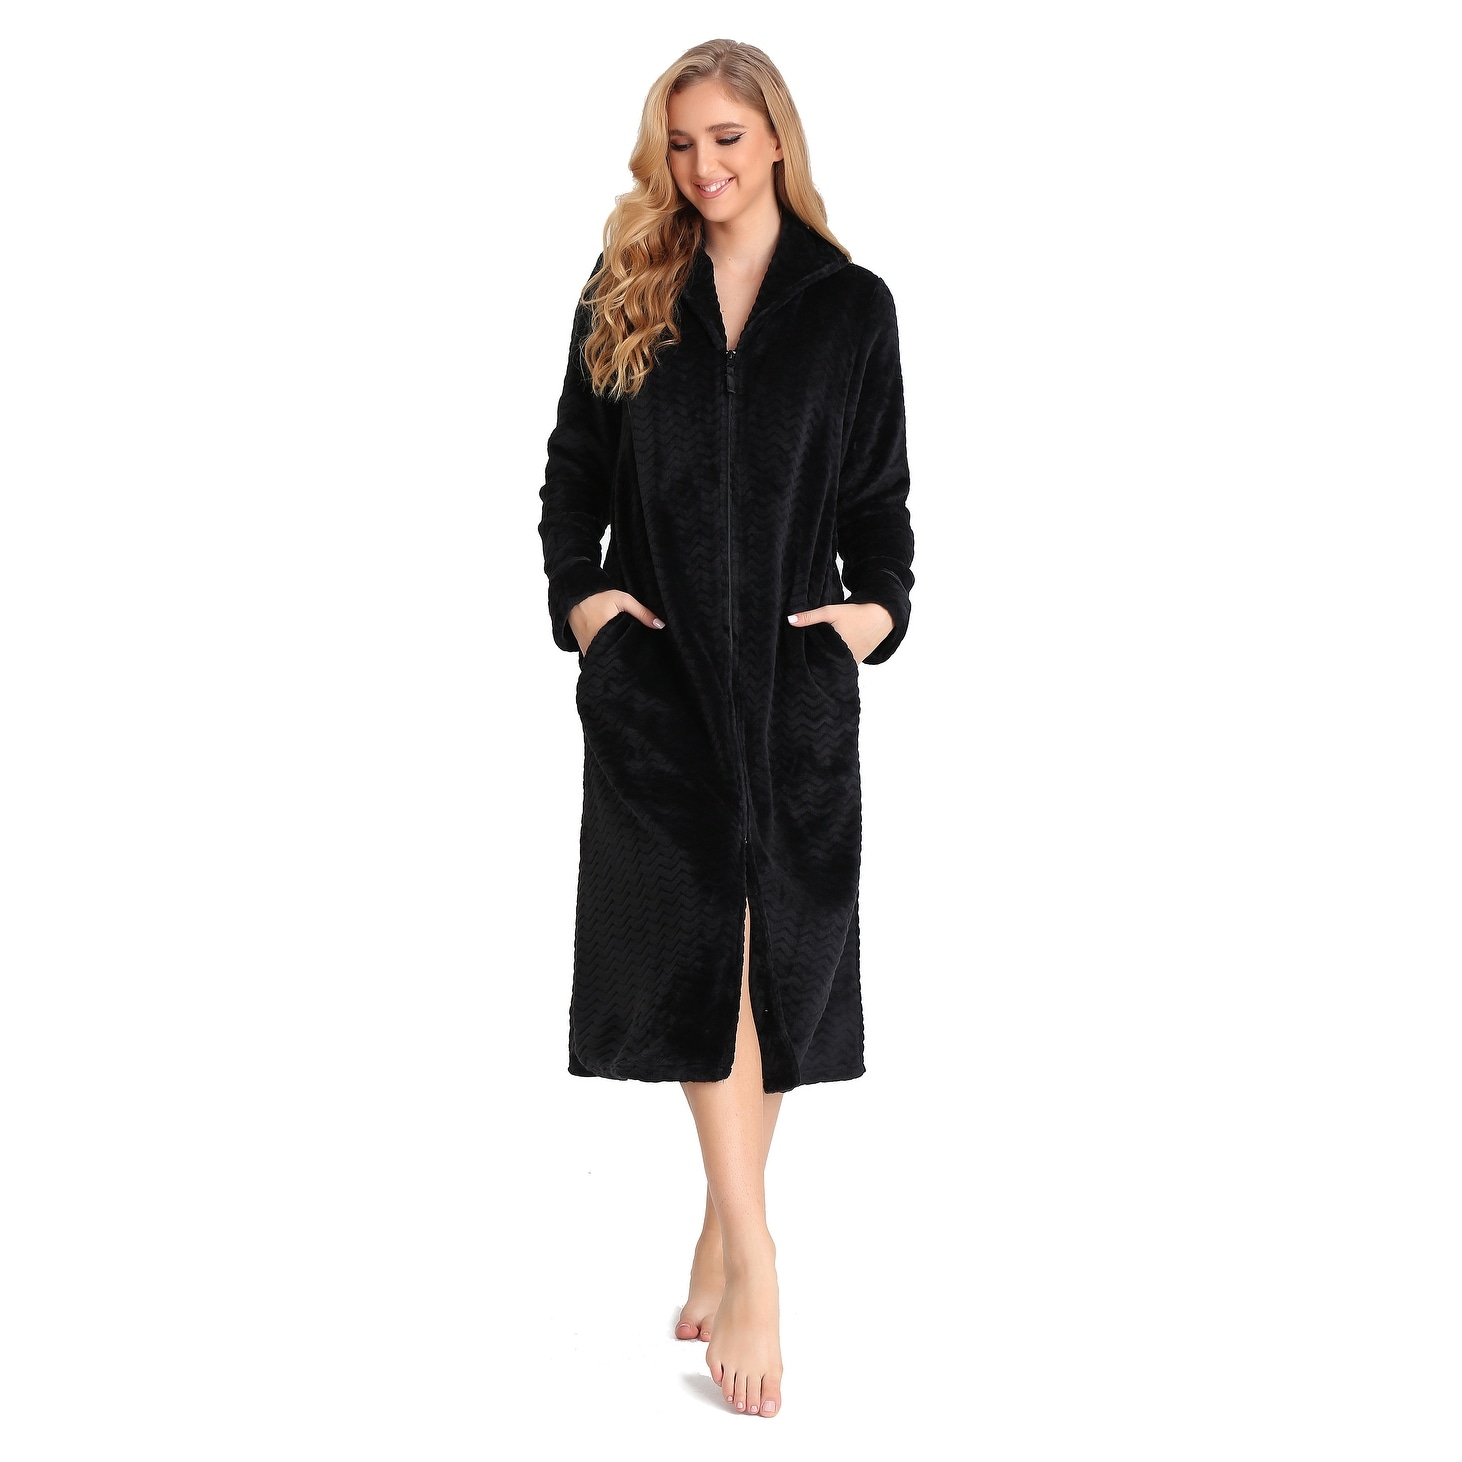 PAVILIA Plush Robe For Women, Black Fluffy Soft Bathrobe, Lightweight Fuzzy  Warm Spa Robe, Cozy Fleece Long House Robe, Satin Trim, Small-Medium -  Walmart.com